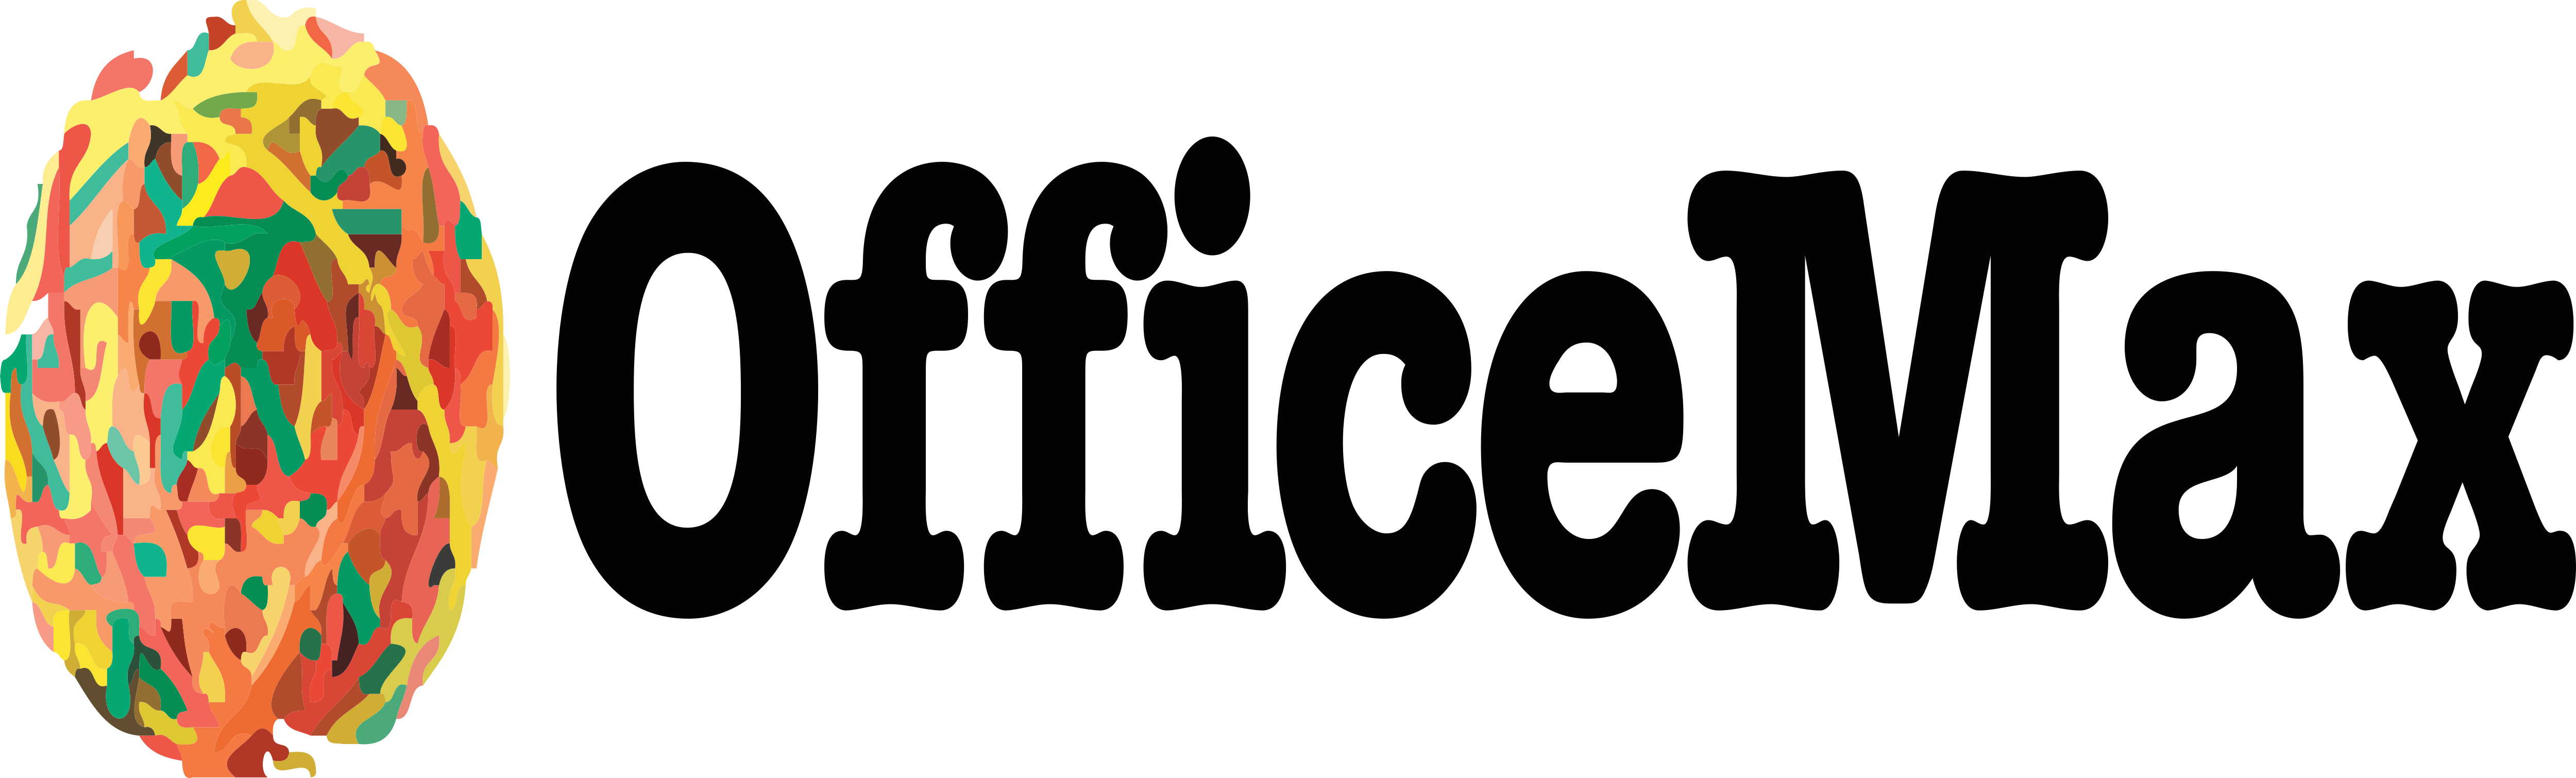 OfficeMax – Logos Download